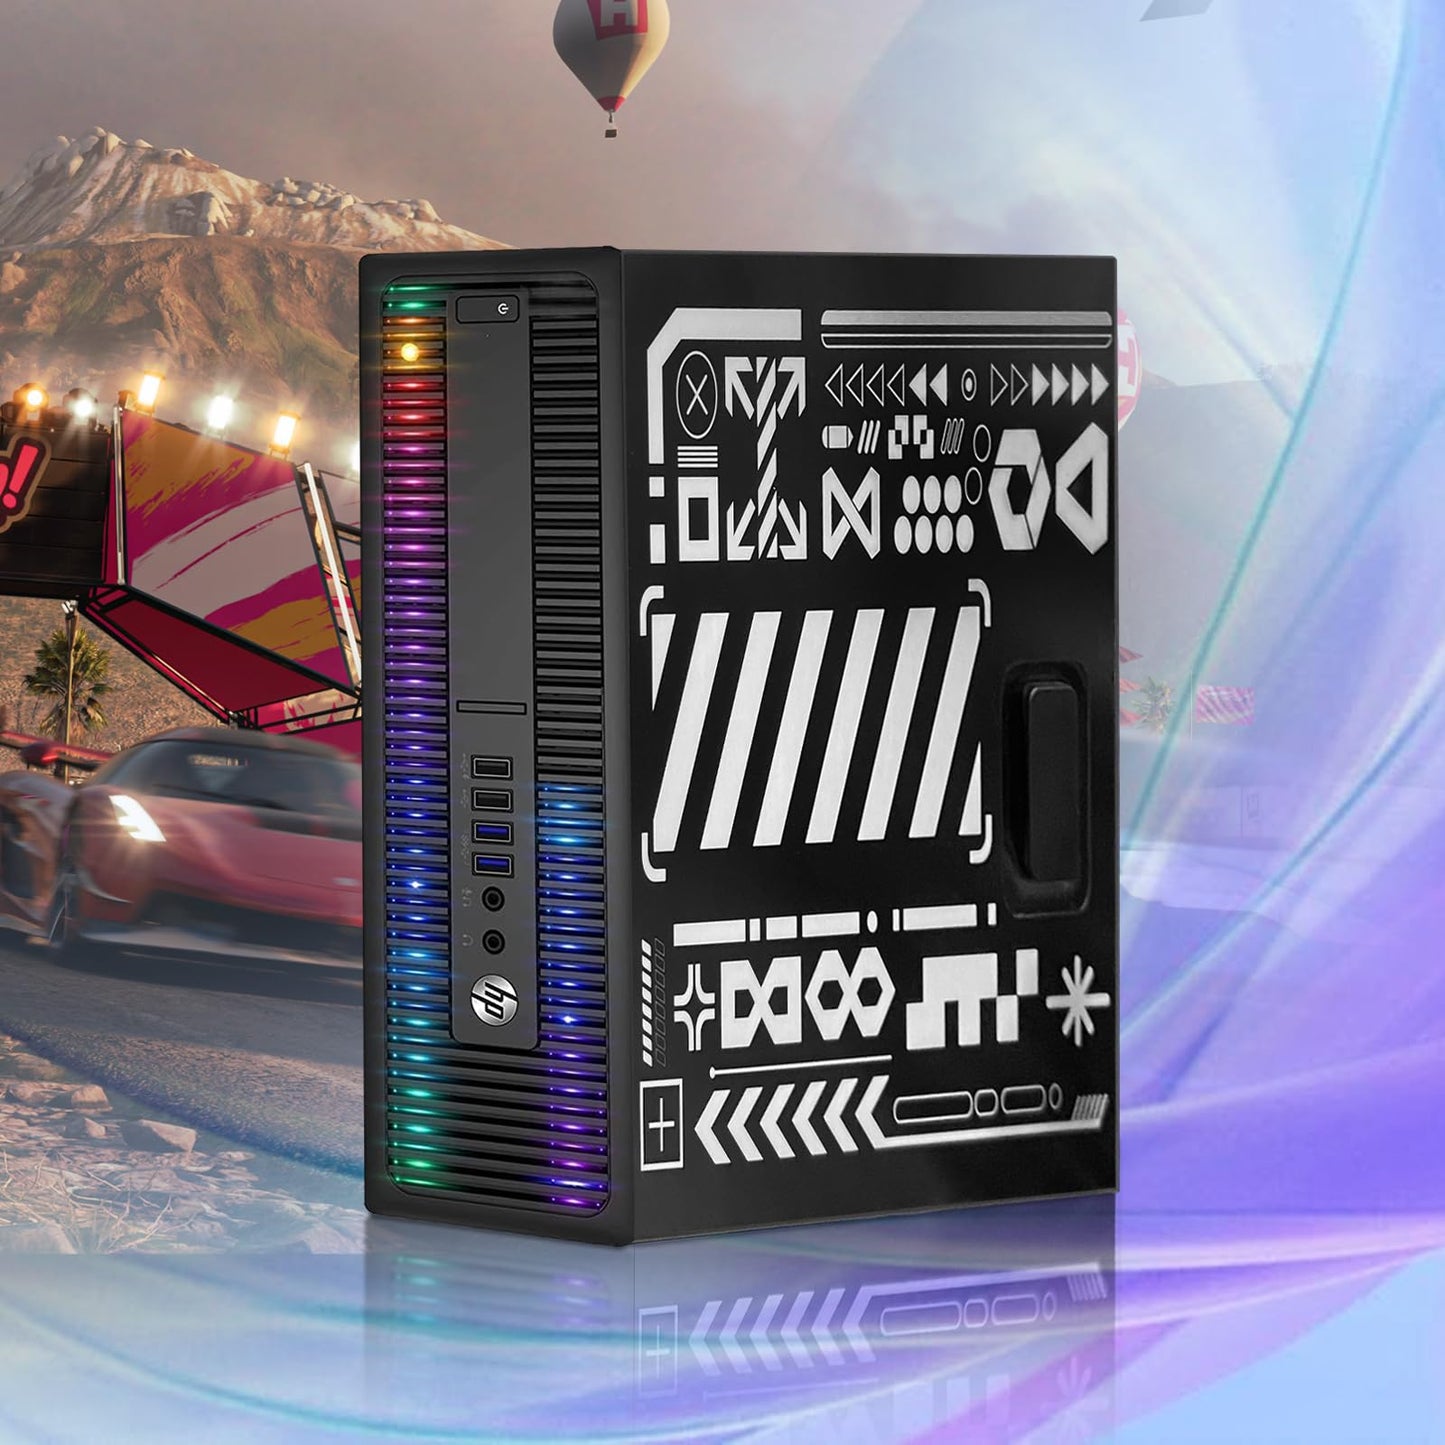 HP RGB Gaming Desktop Computer, Intel Quad Core I5-6500 up to 3.6GHz, Radeon RX 550 4G, 16GB DDR4, 1T SSD, RGB Keyboard & Mouse, 600M WiFi & Bluetooth, Win 10 Pro (Renewed)